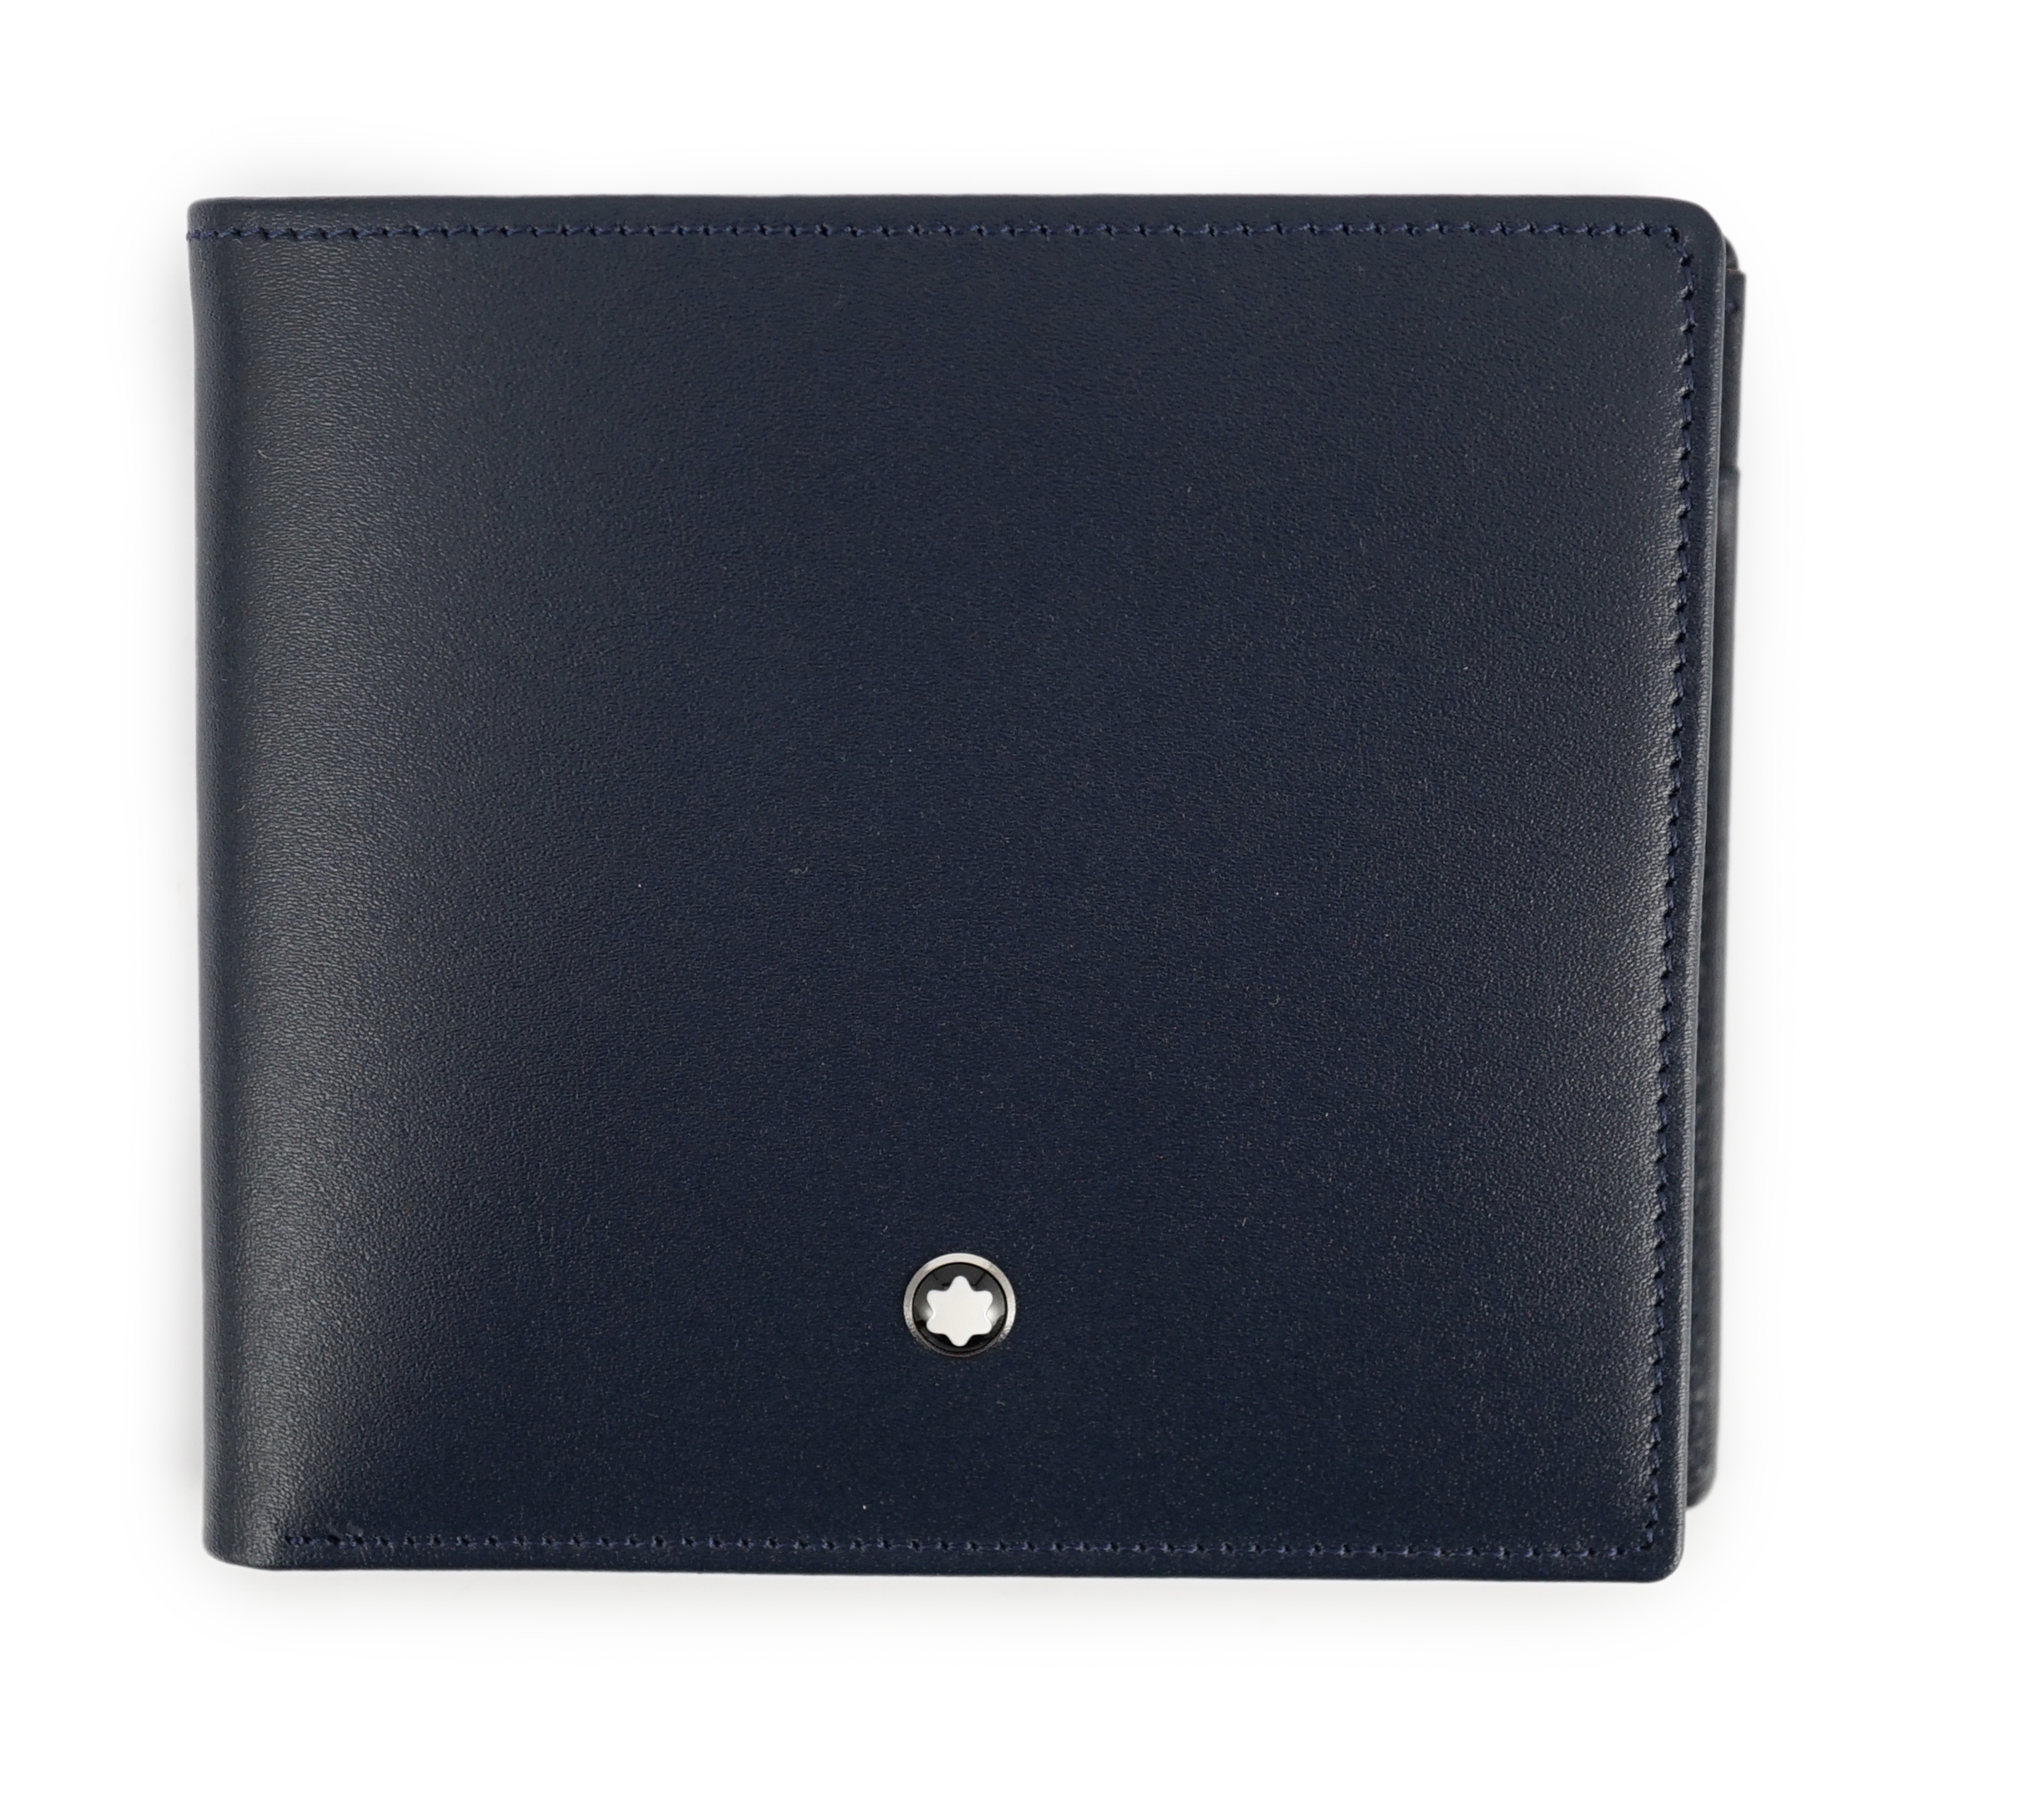 A Mont Blanc Meisterstuck 4cc navy leather wallet width 9.5cm, height 11cm